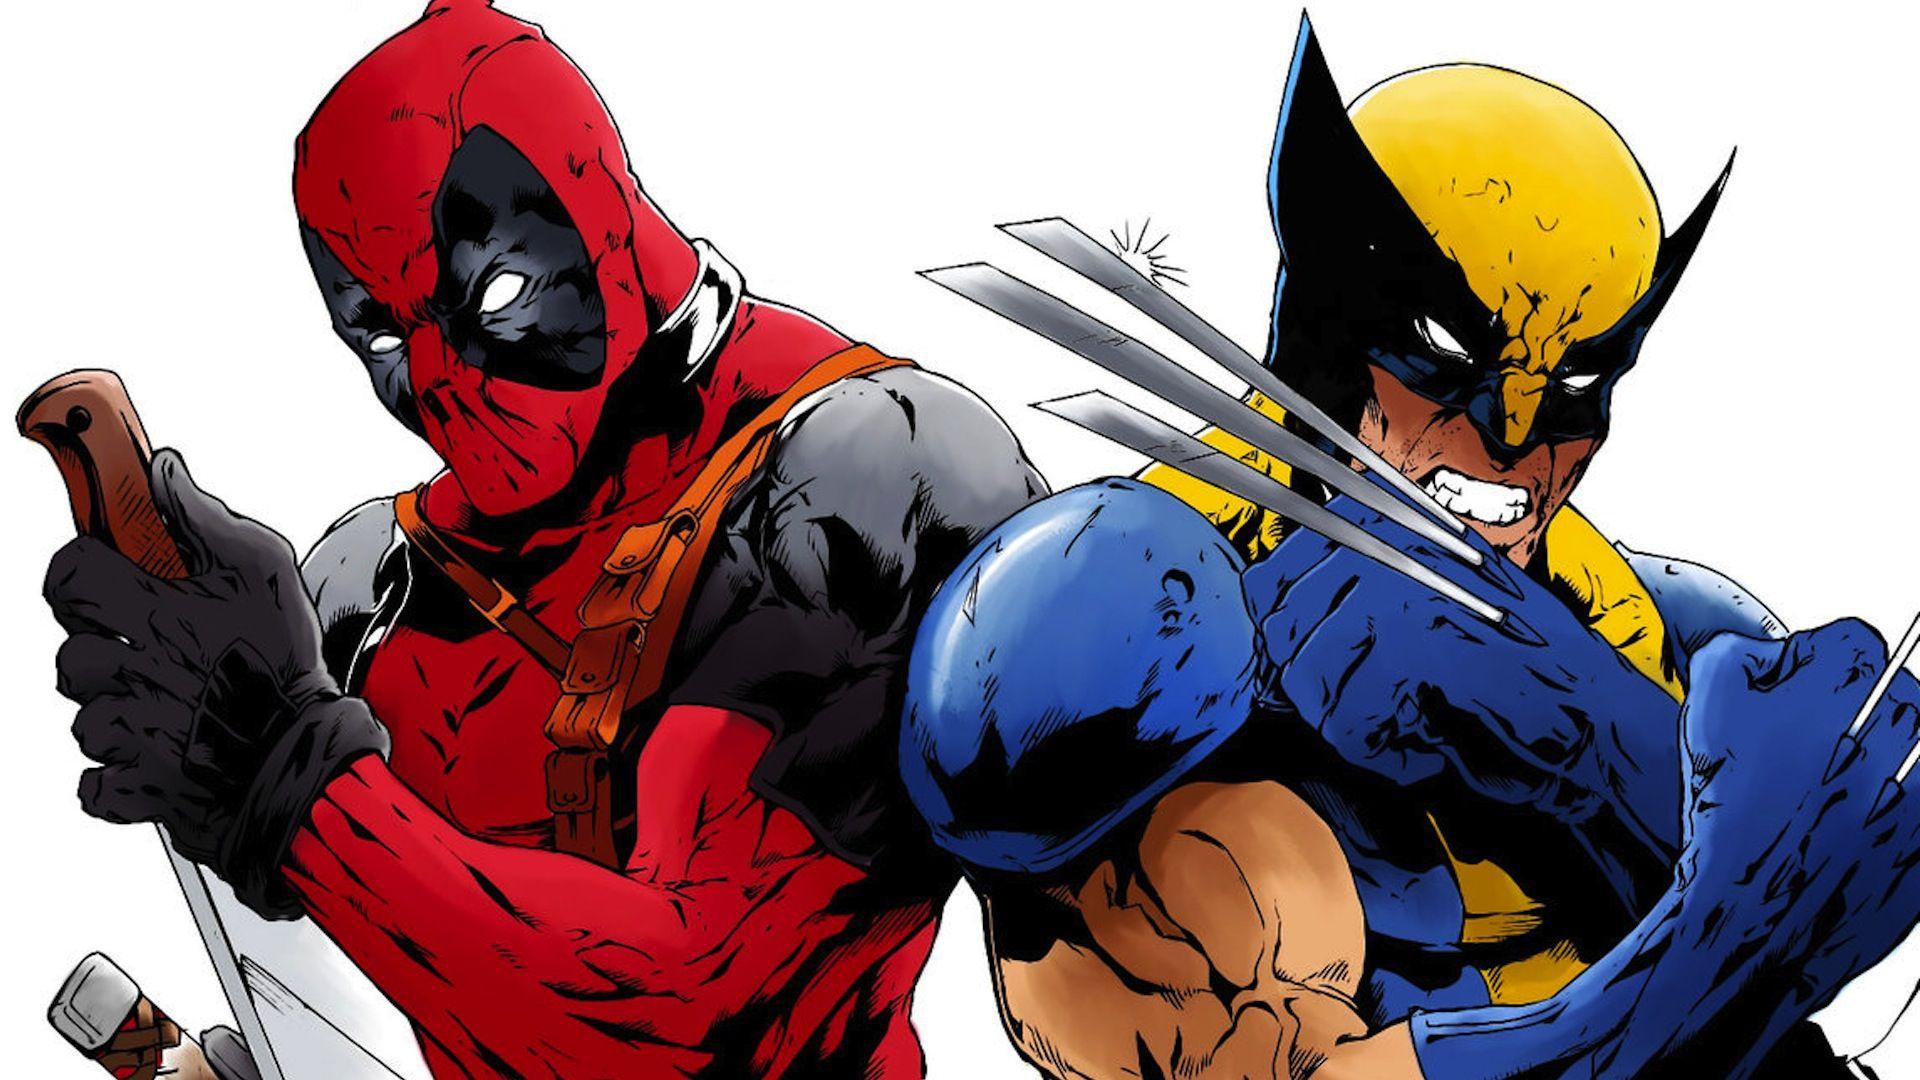 Wolverine vs Deadpool Wallpapers - Top Free Wolverine vs Deadpool